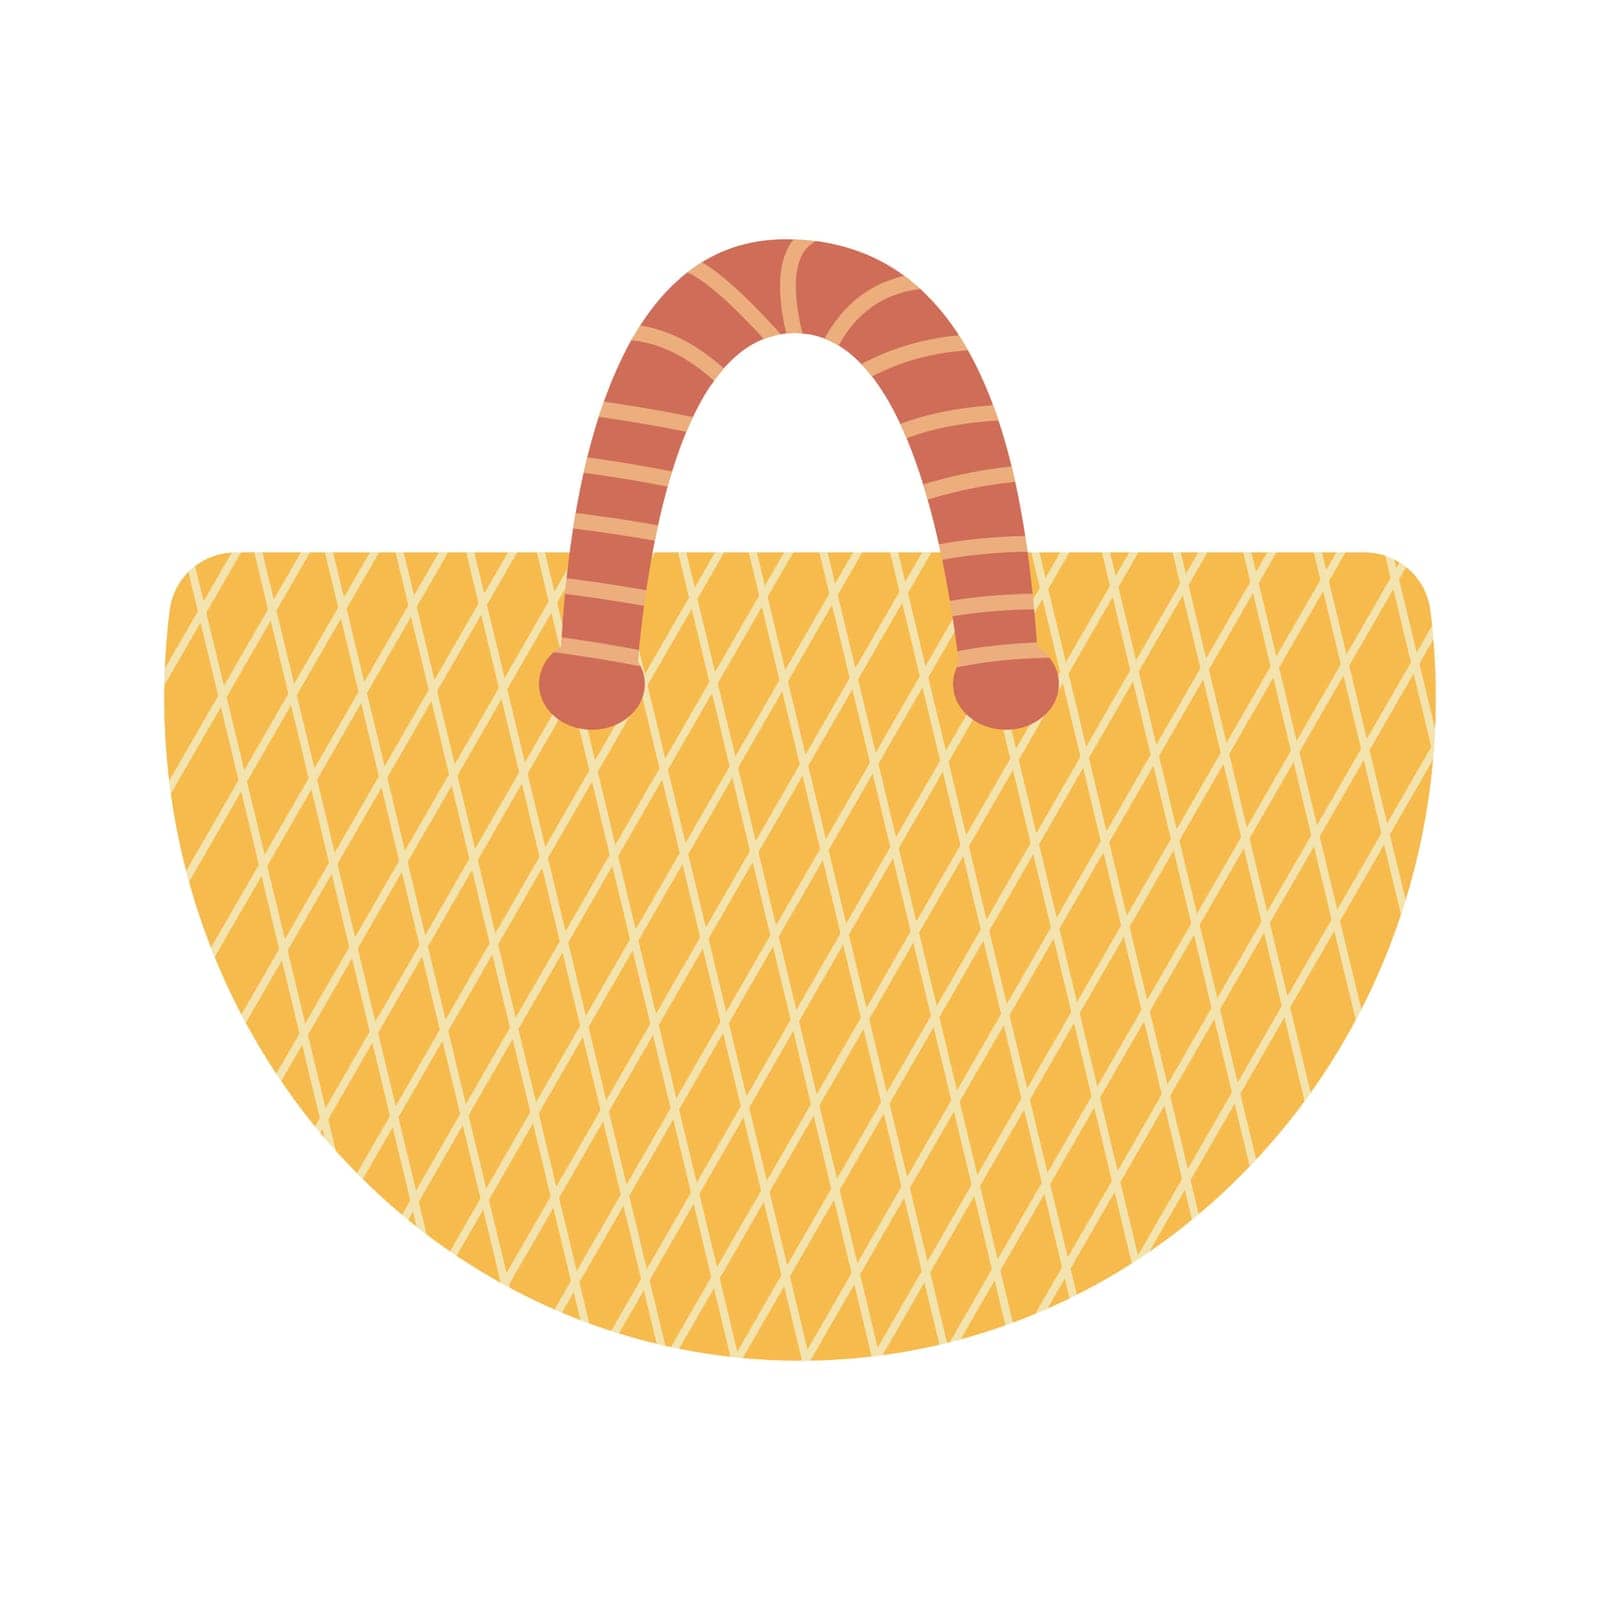 Beach bag female fashion accessory, hand drawn vector illustration